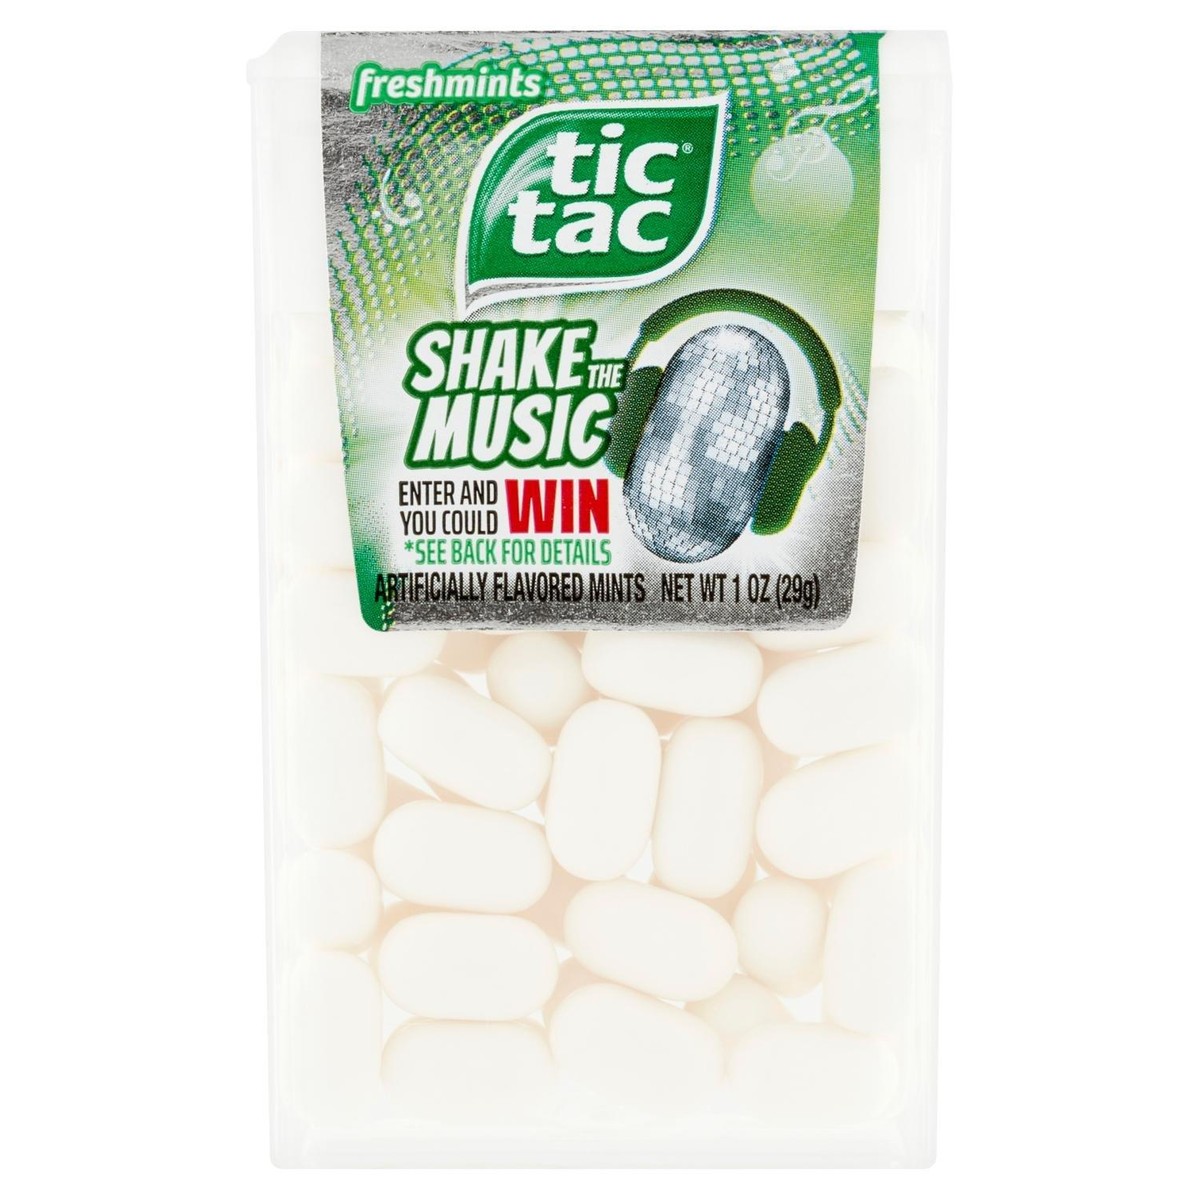 Tic Tac Wintergreen Sugar Free Gum, 29 g : : Grocery